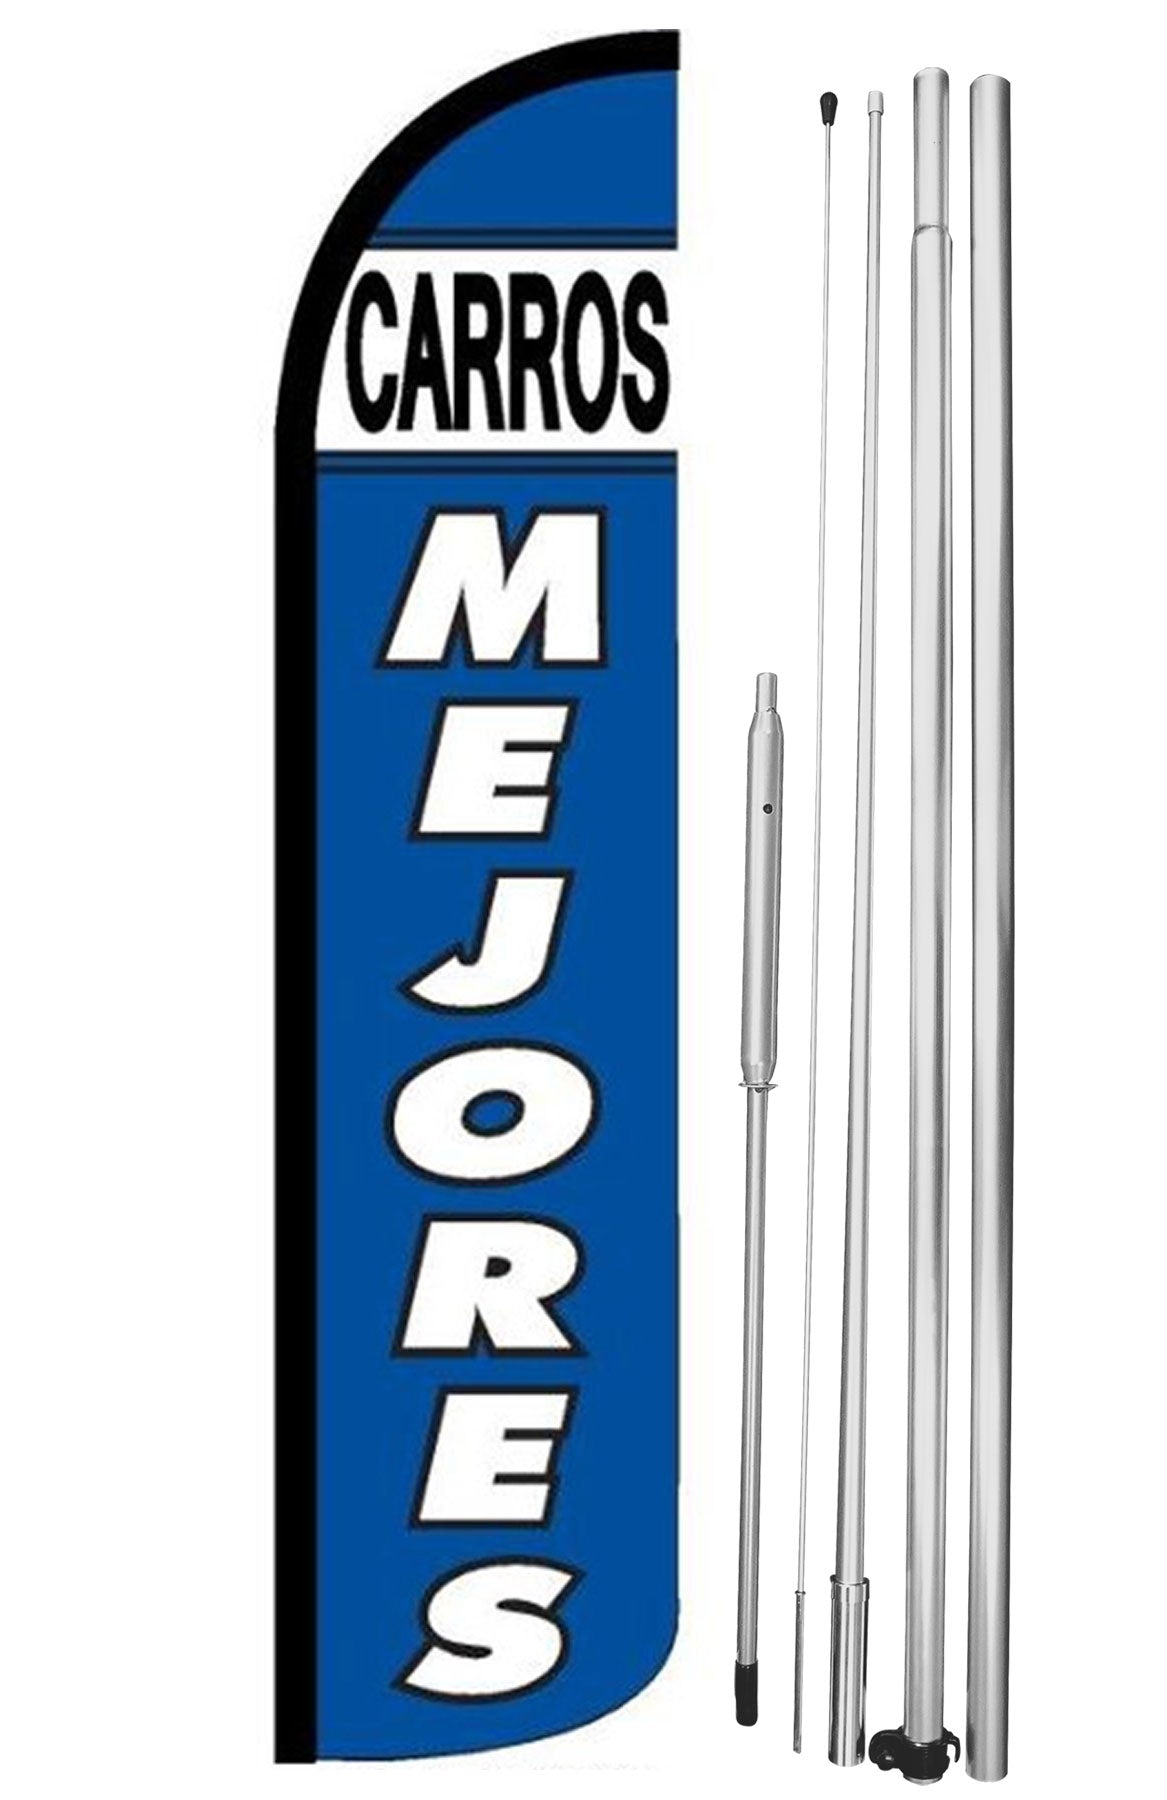 CARROS MEJORES